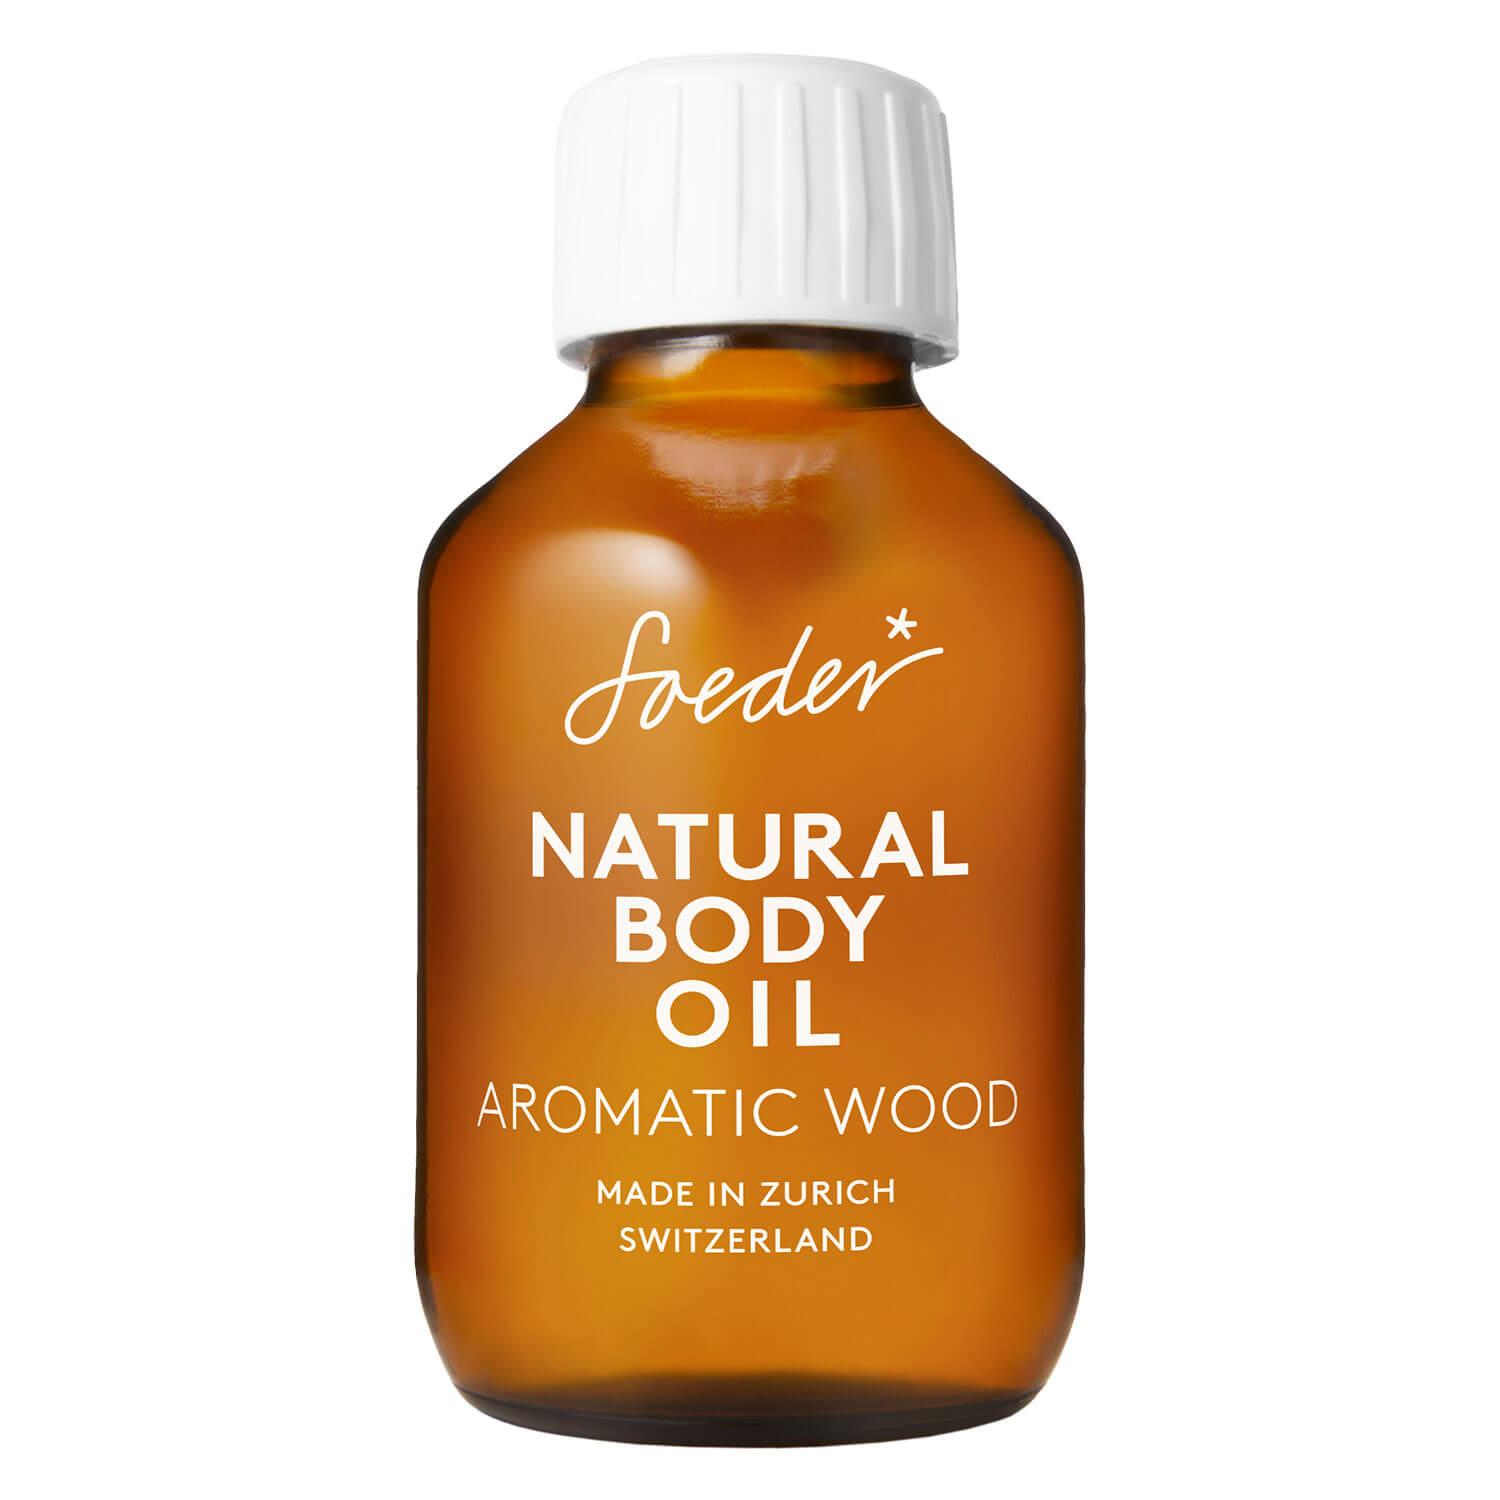 Soeder - Natural Body Oil Aromatic Wood